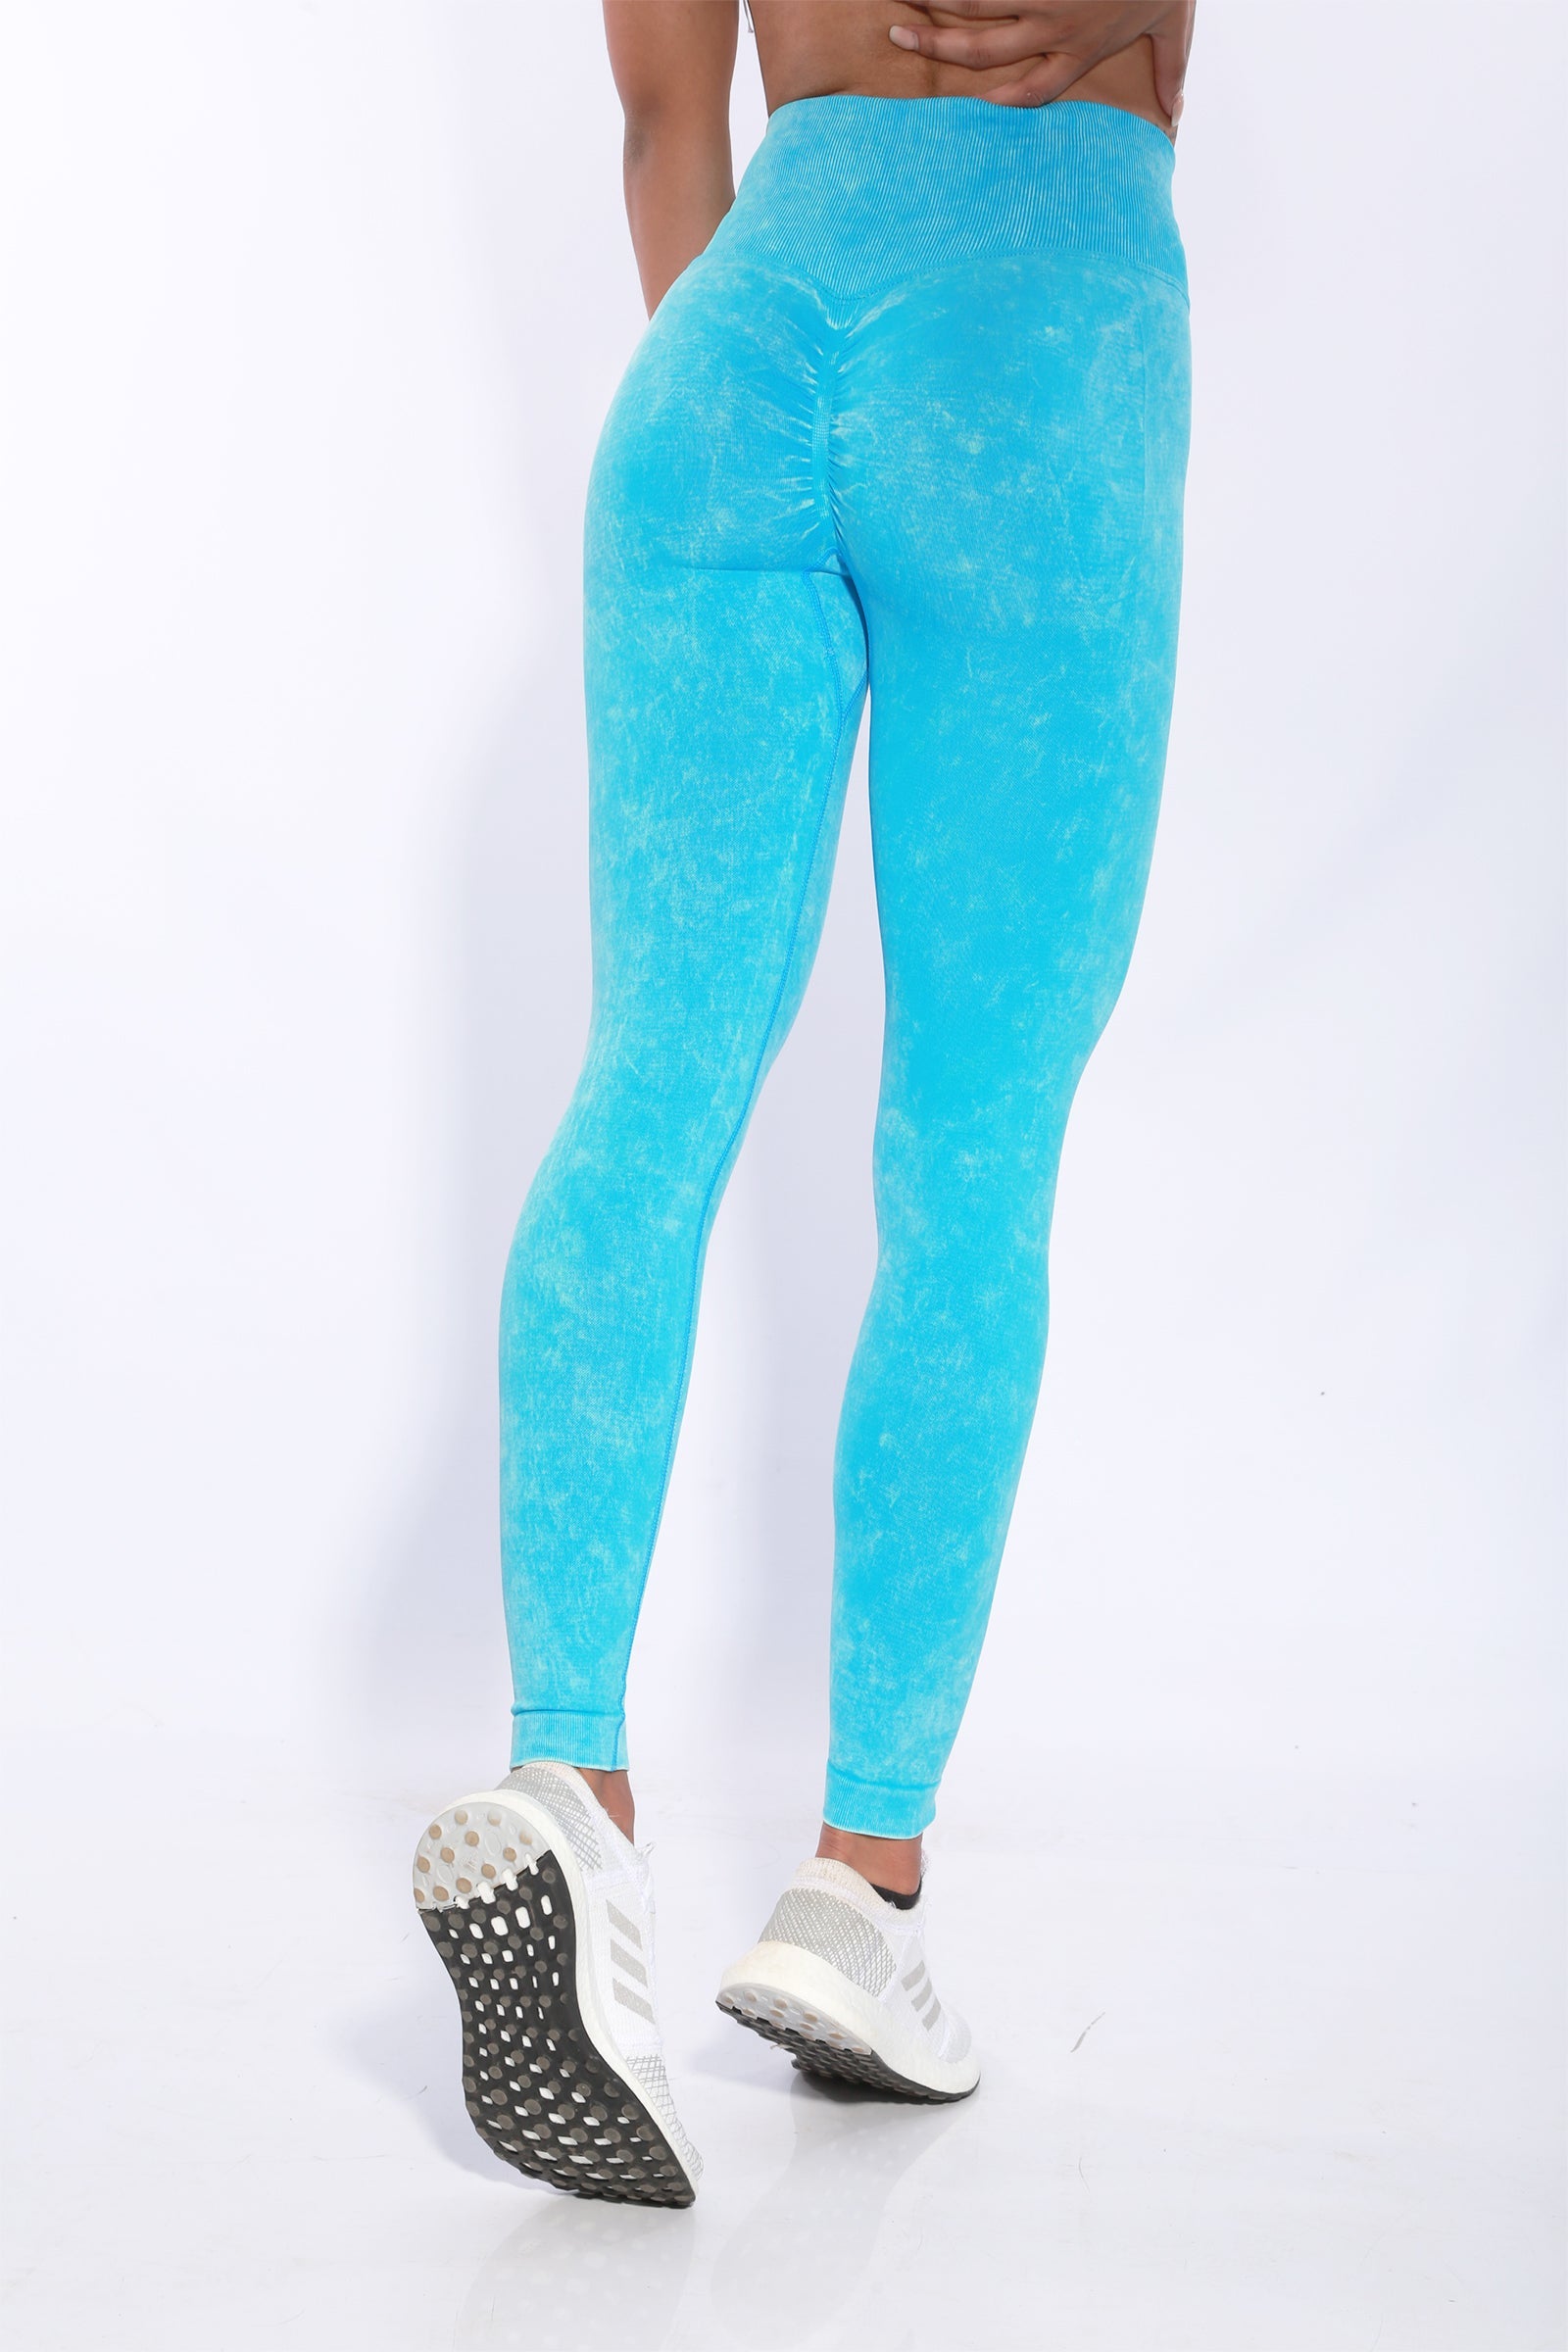 Gym bunny Bubble Scrunch tik tok leggings active wear - blue – Wonderfit  Australia